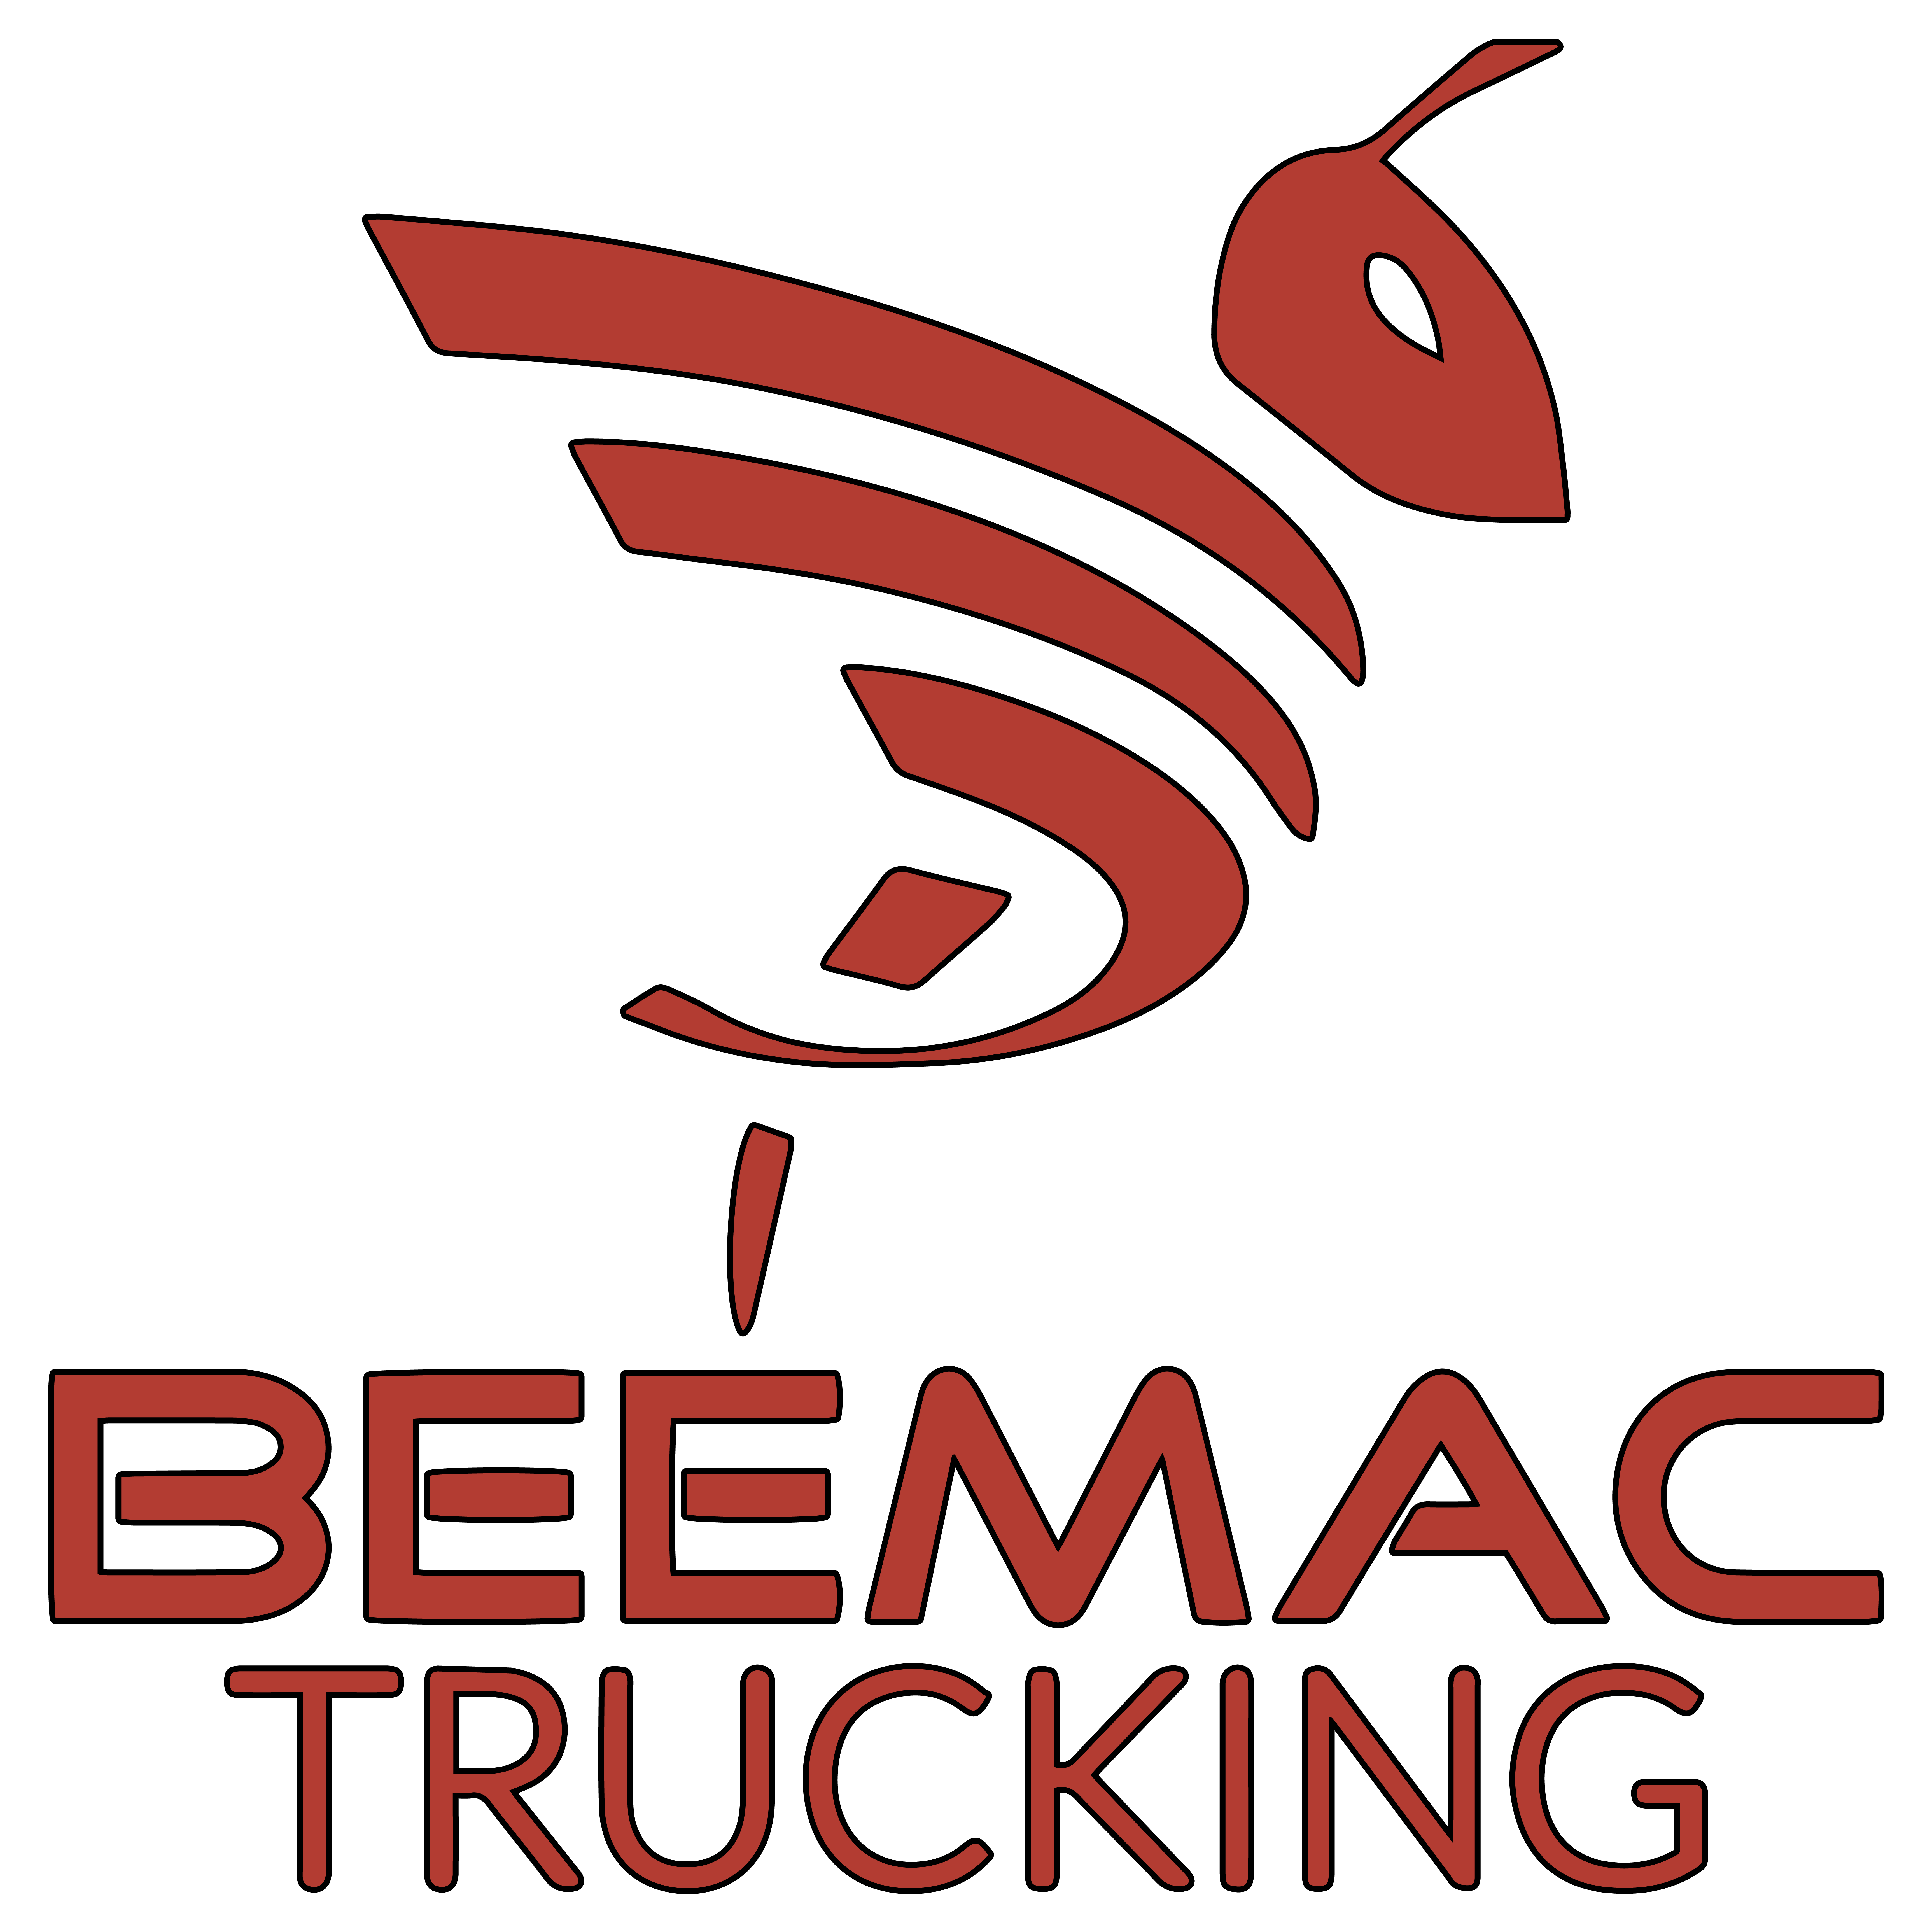 Beemac Trucking